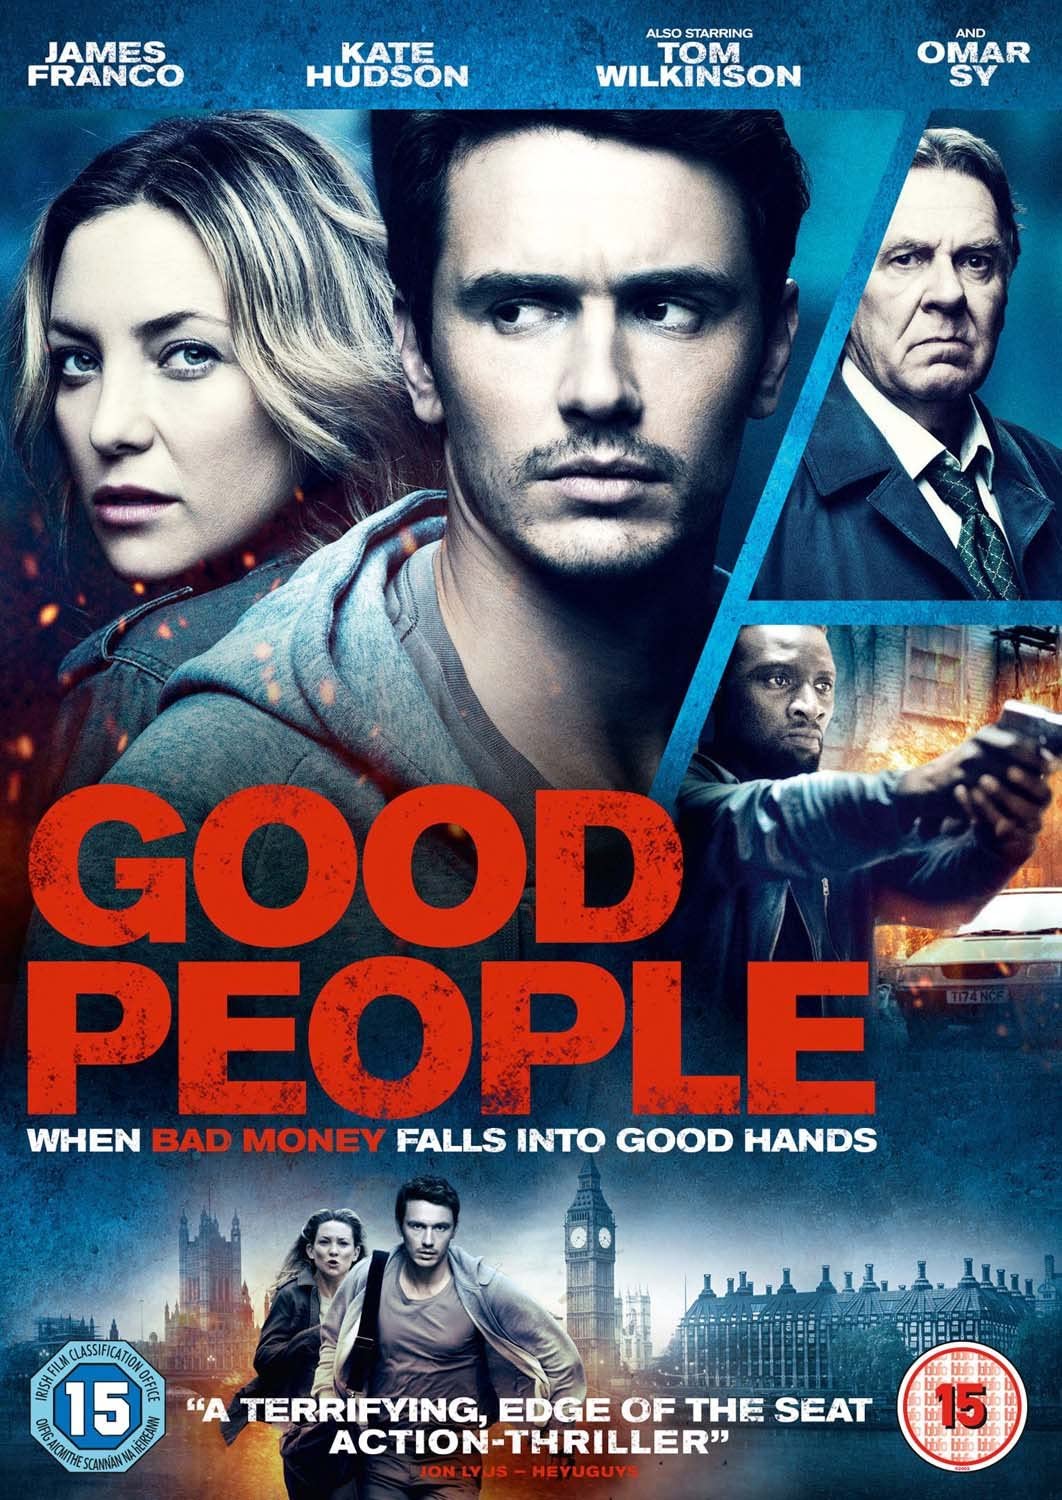 Good People [2017] -Thriller/Action [DVD]